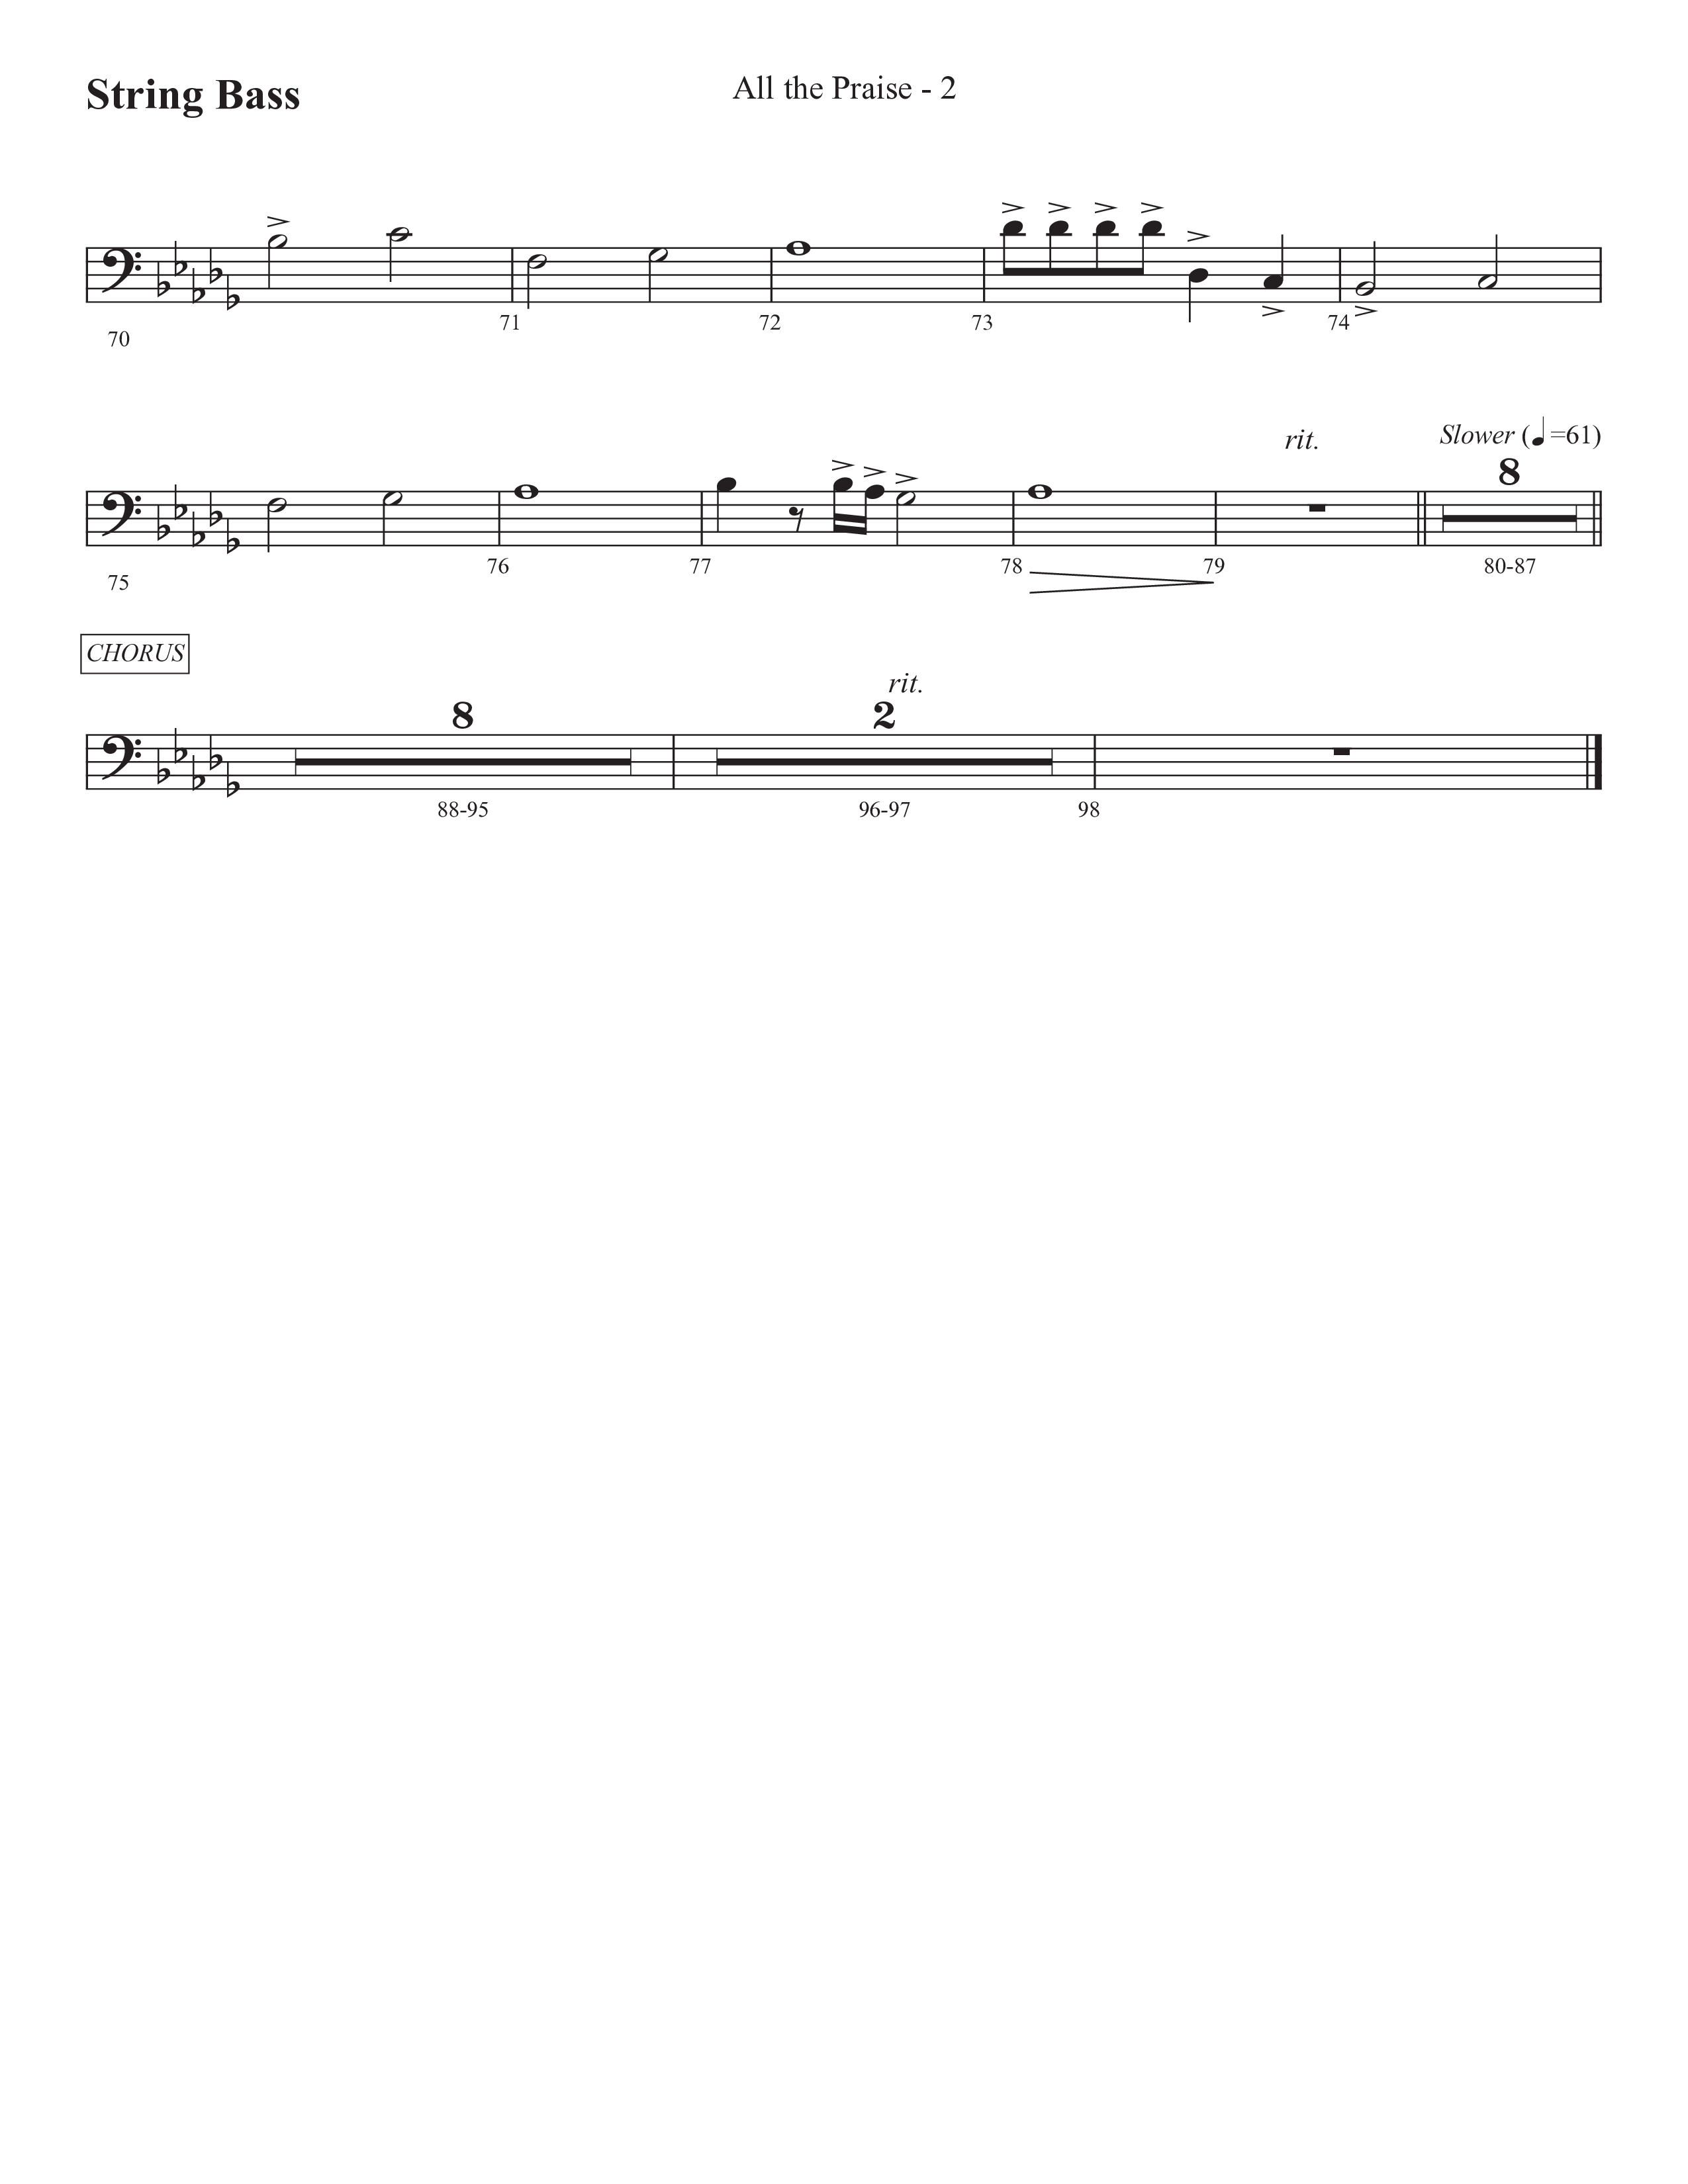 All The Praise (Choral Anthem SATB) String Bass (Prestonwood Worship / Prestonwood Choir / Arr. Michael Neale / Orch. Carson Wagner)